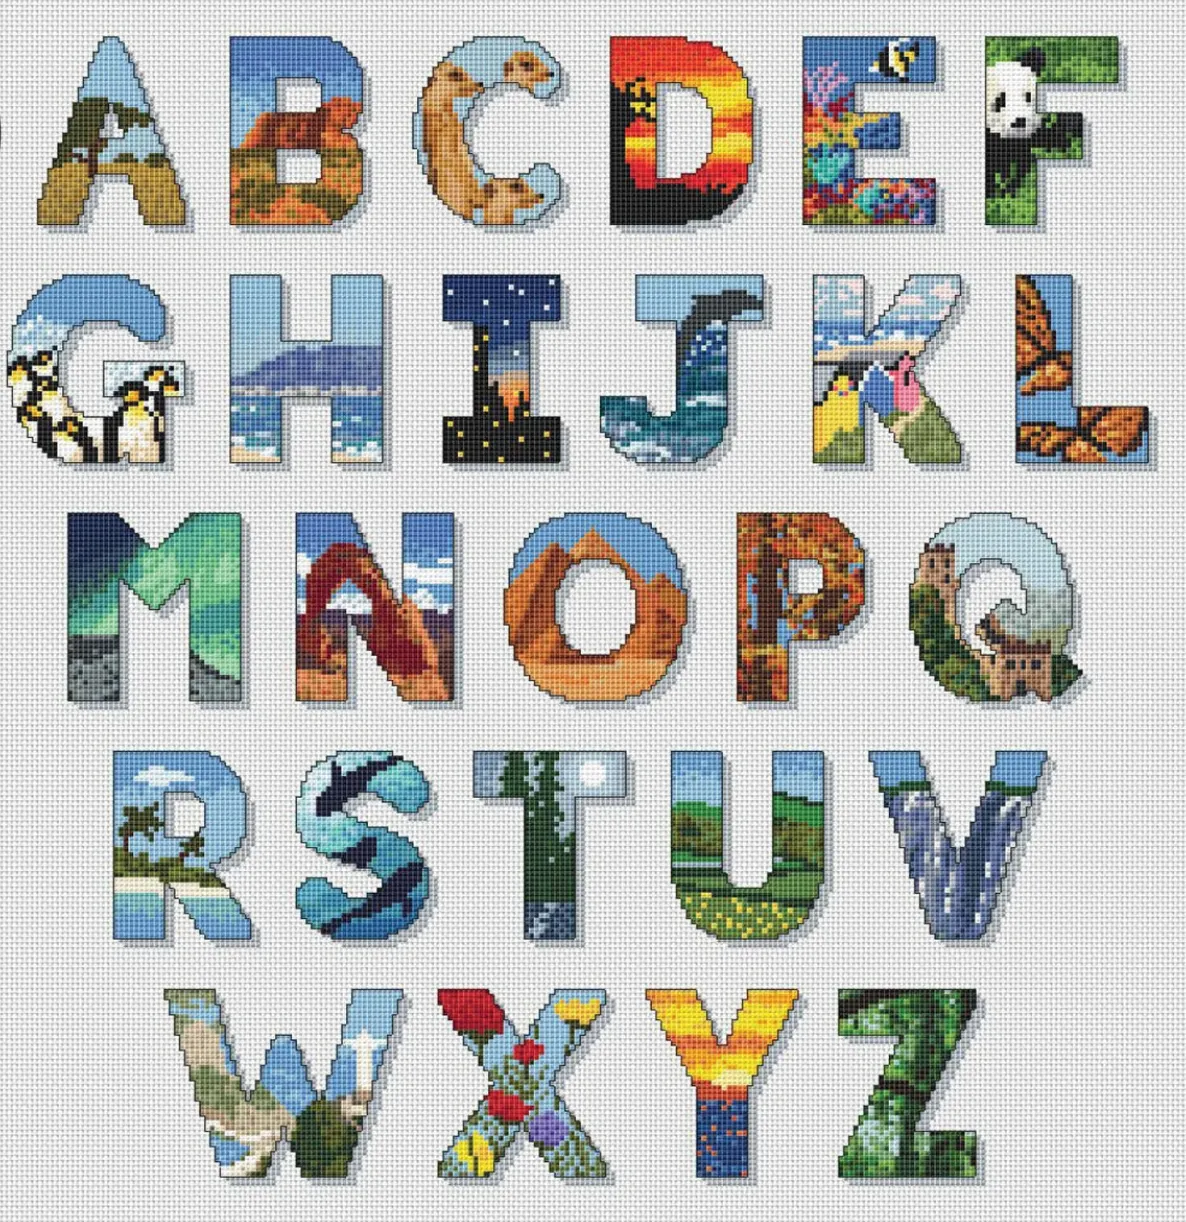 5. Explore the World Alphabet by ClimbingGoatDesigns